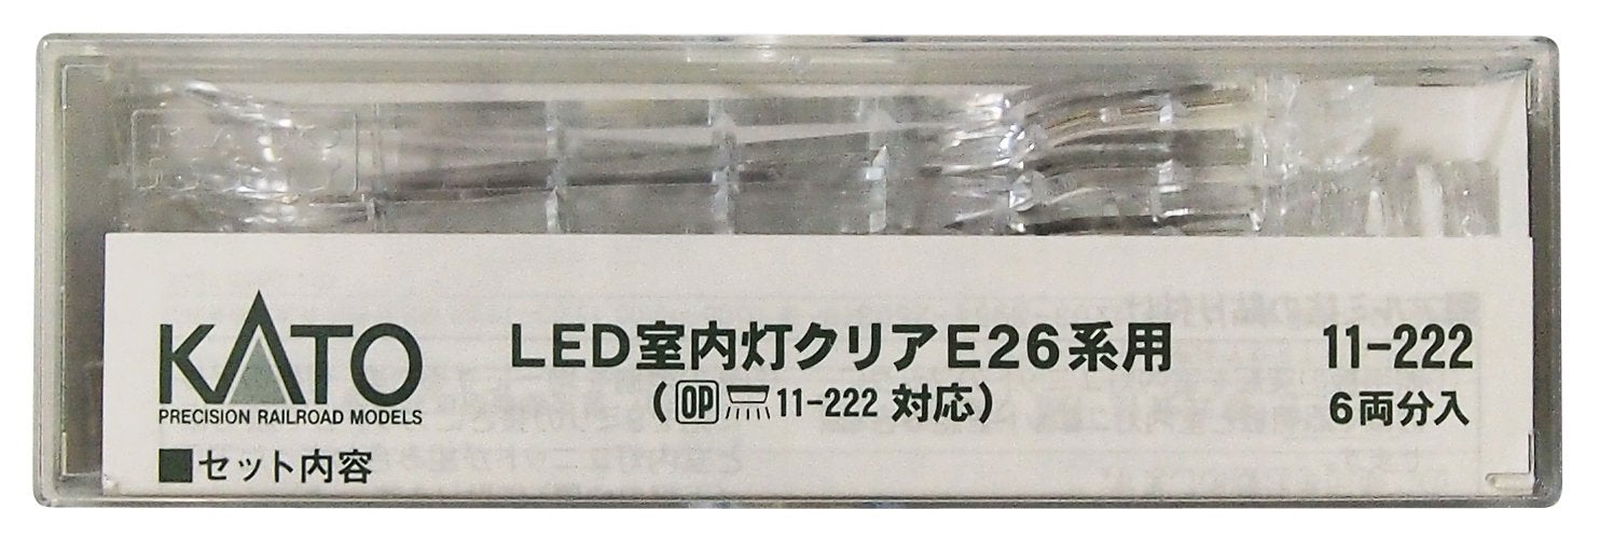 KATO 11-222 LED Interior Lighting Kit, Ver.2 for Series - BanzaiHobby